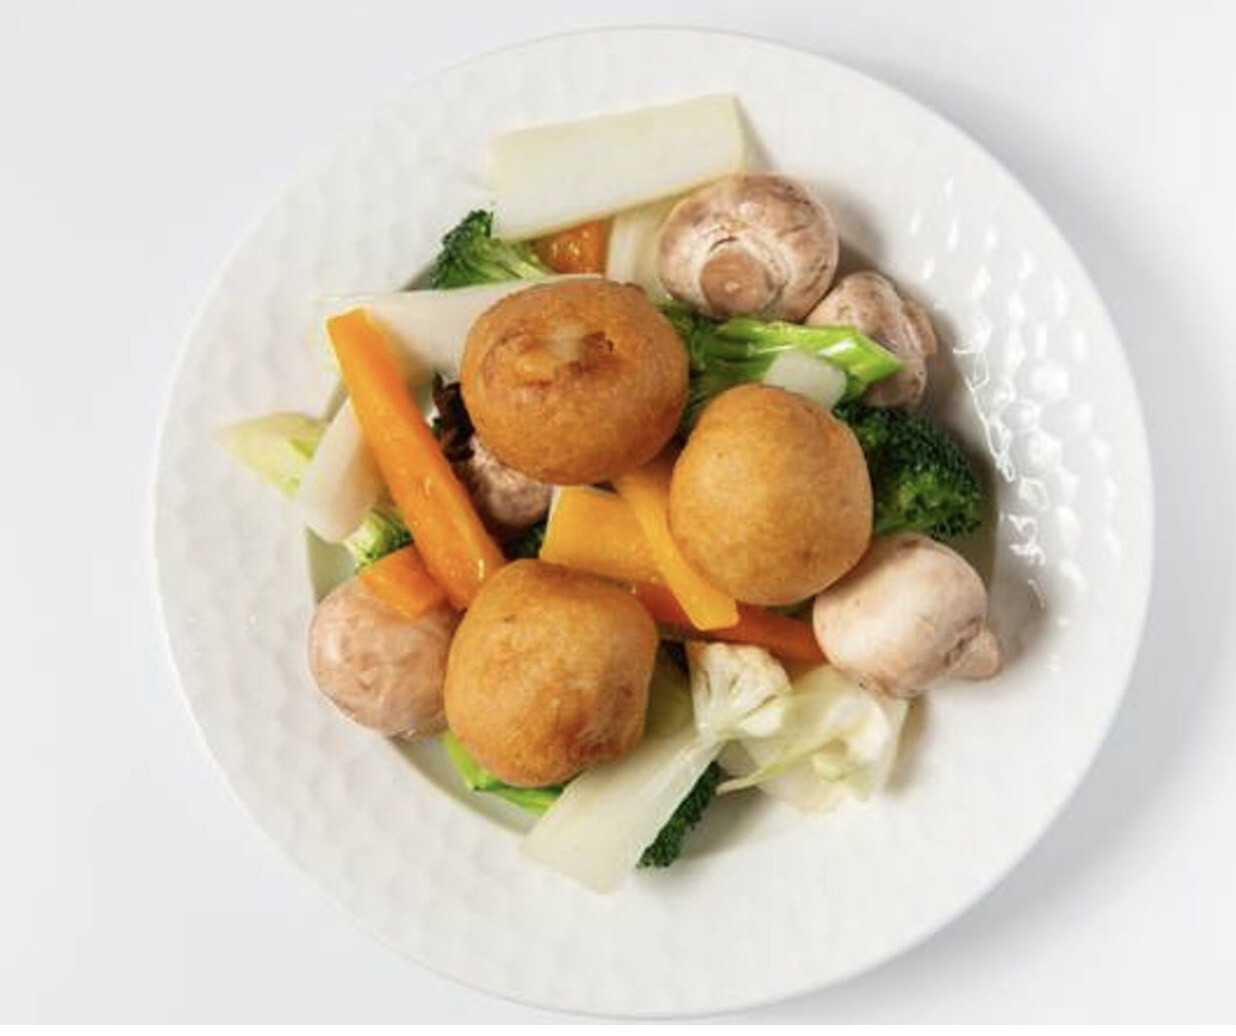 Moo Goo Guy Kew
Boules de poulet panée
et légumes chinois